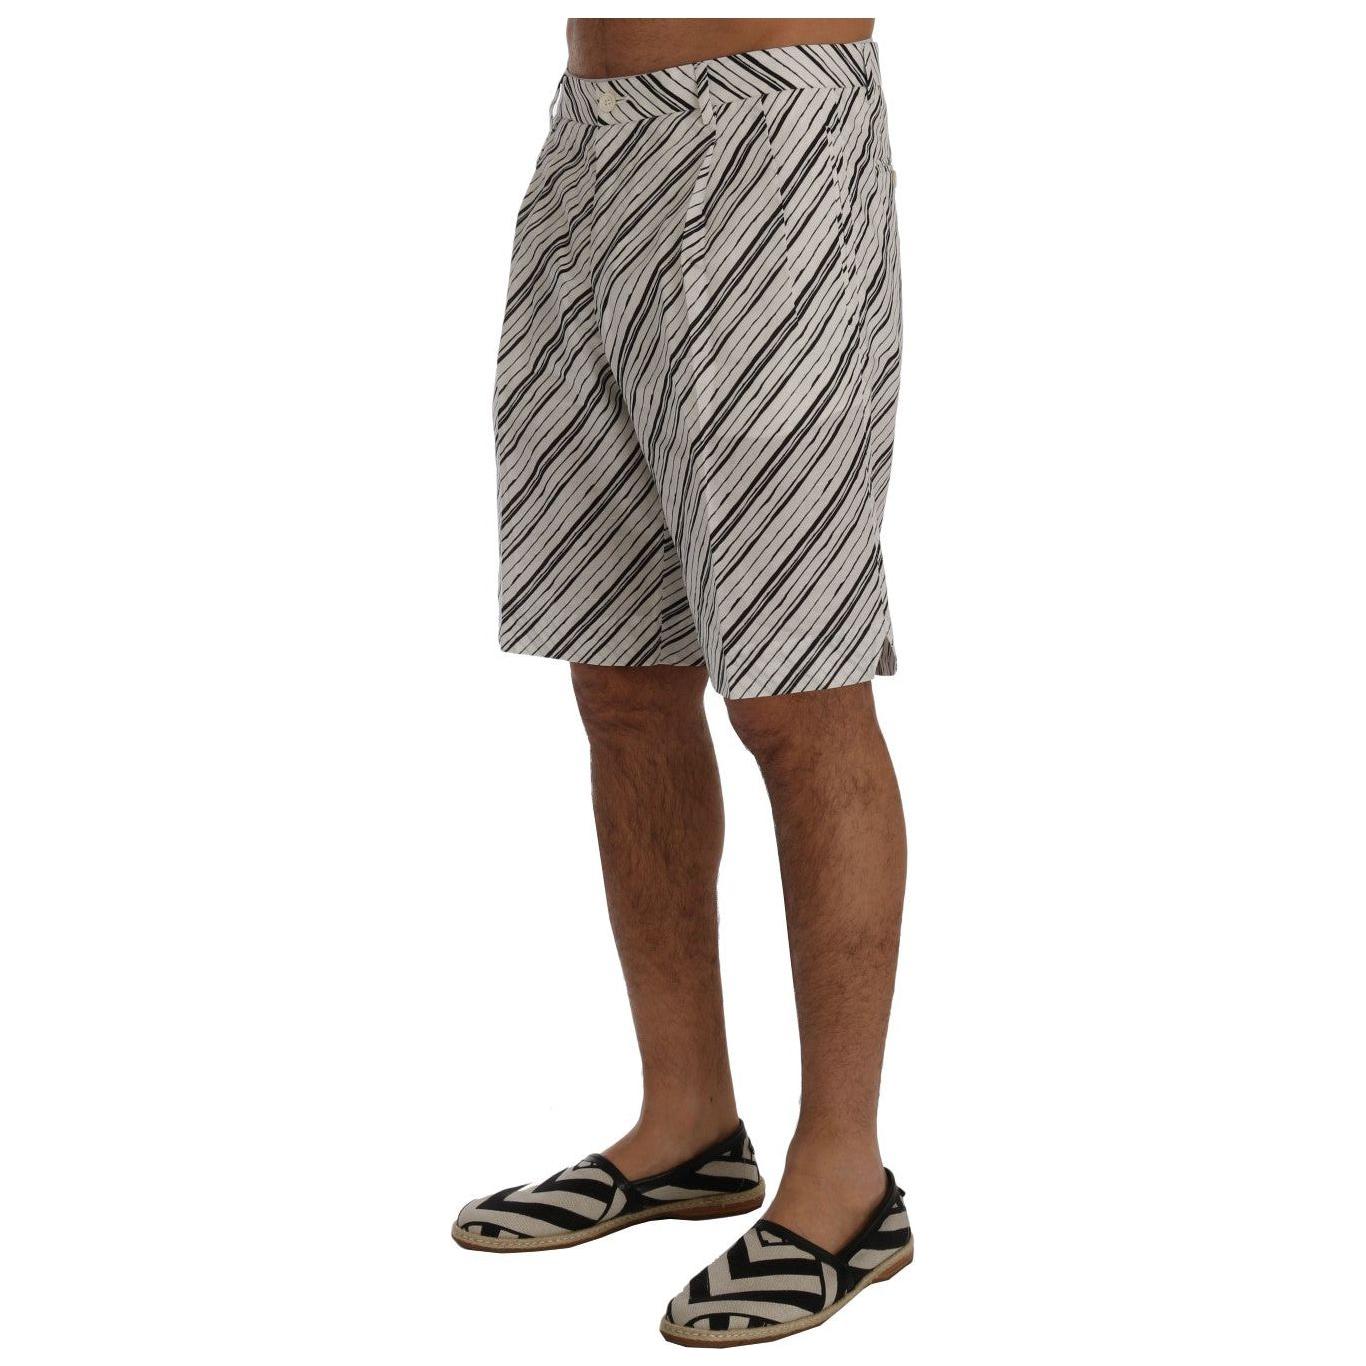 Dolce & Gabbana Elegant Striped Cotton-Linen Shorts white-black-striped-casual-shorts-1 443622-white-black-striped-casual-shorts-2-1.jpg